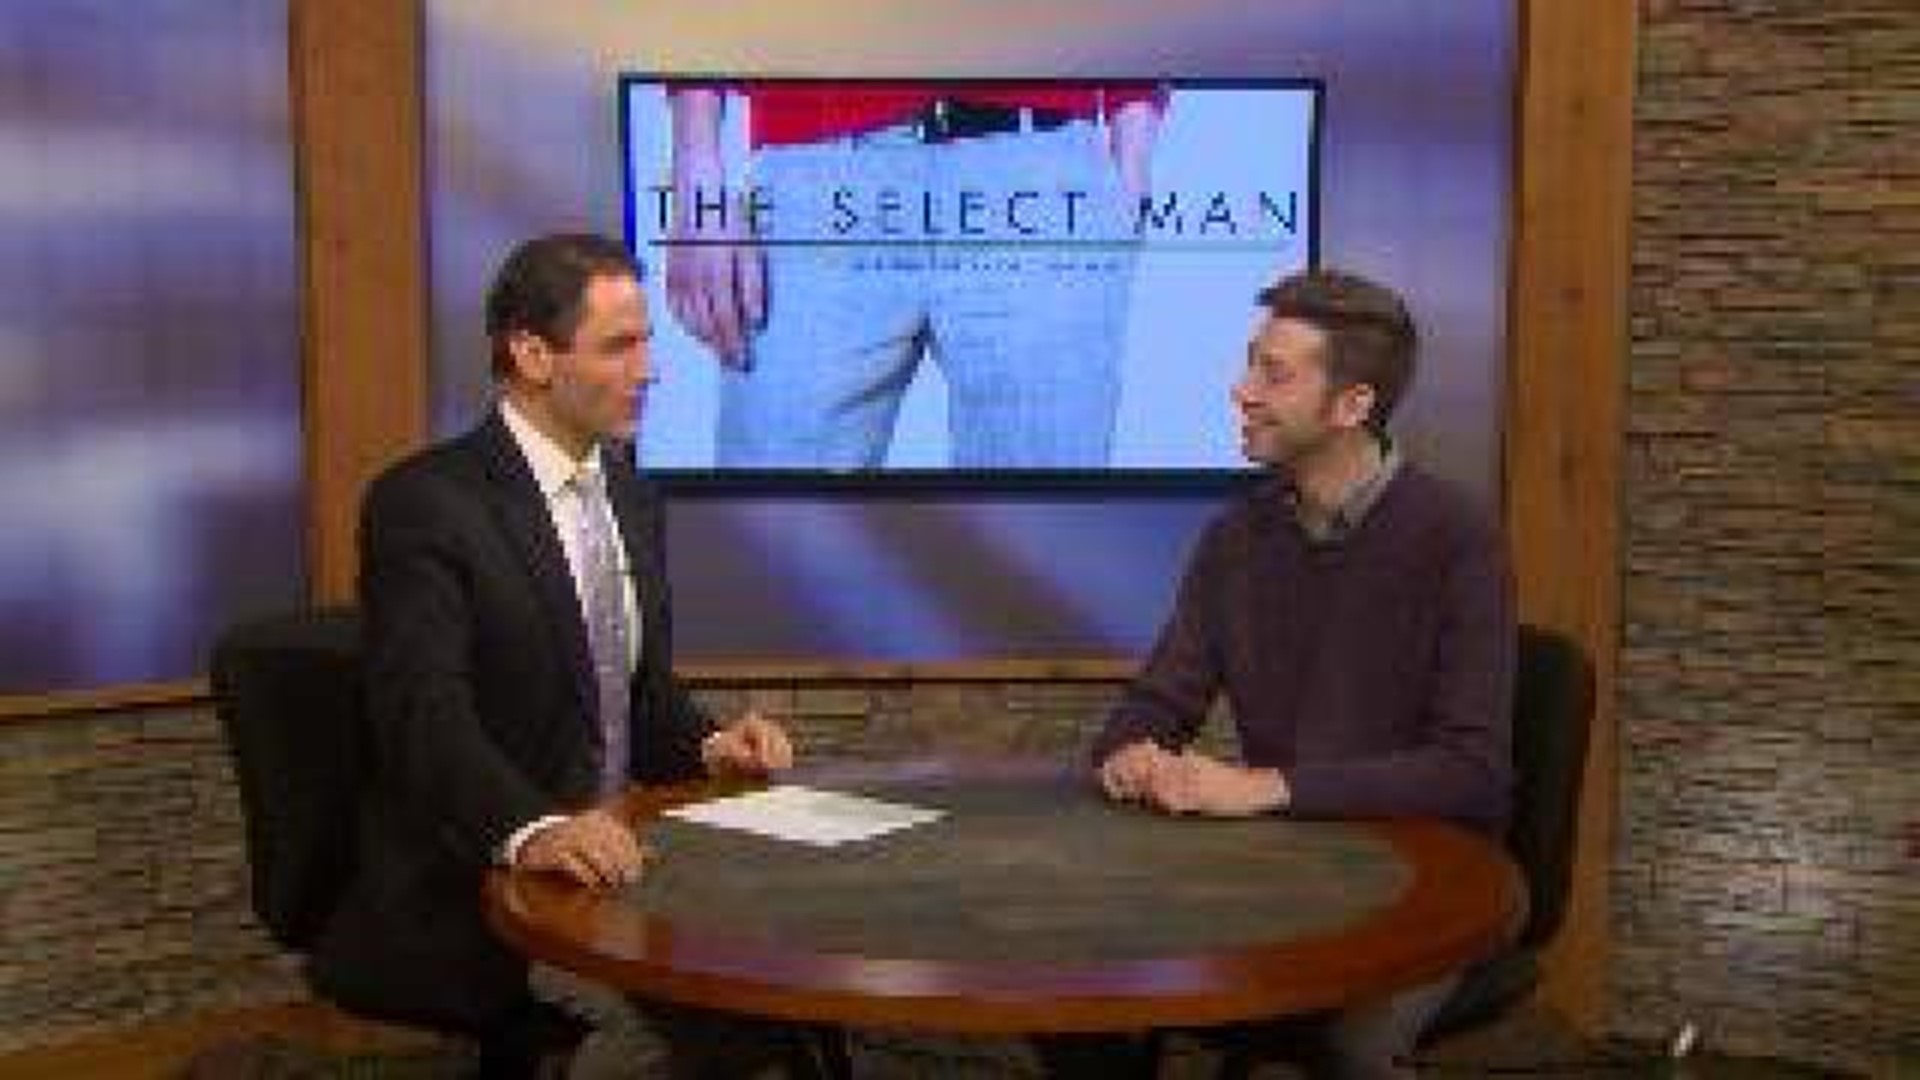 The Select Man